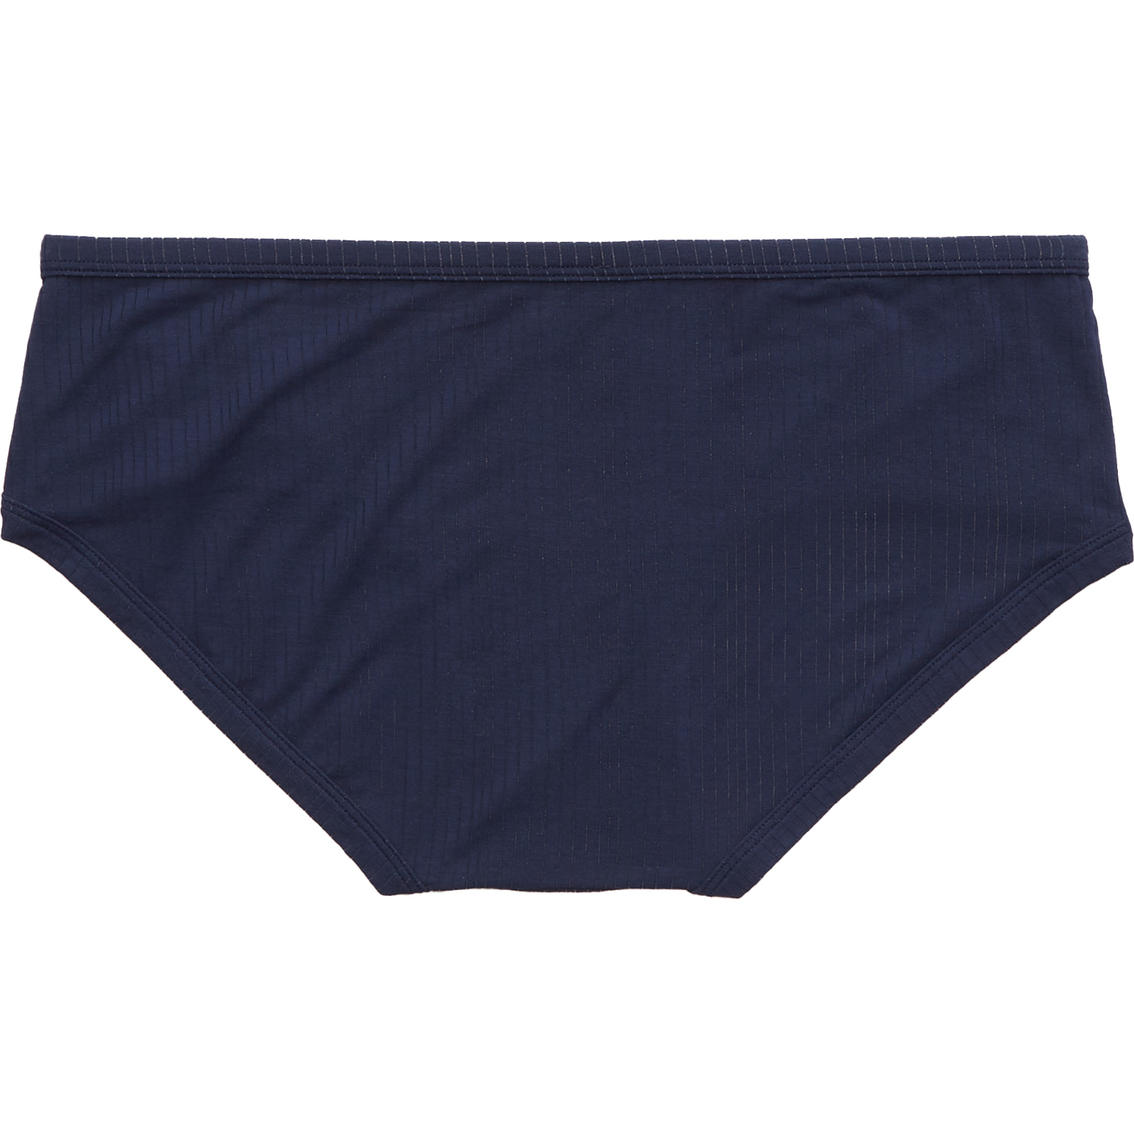 Aerie Juniors Modal Ribbed Boybrief Underwear - Image 2 of 2